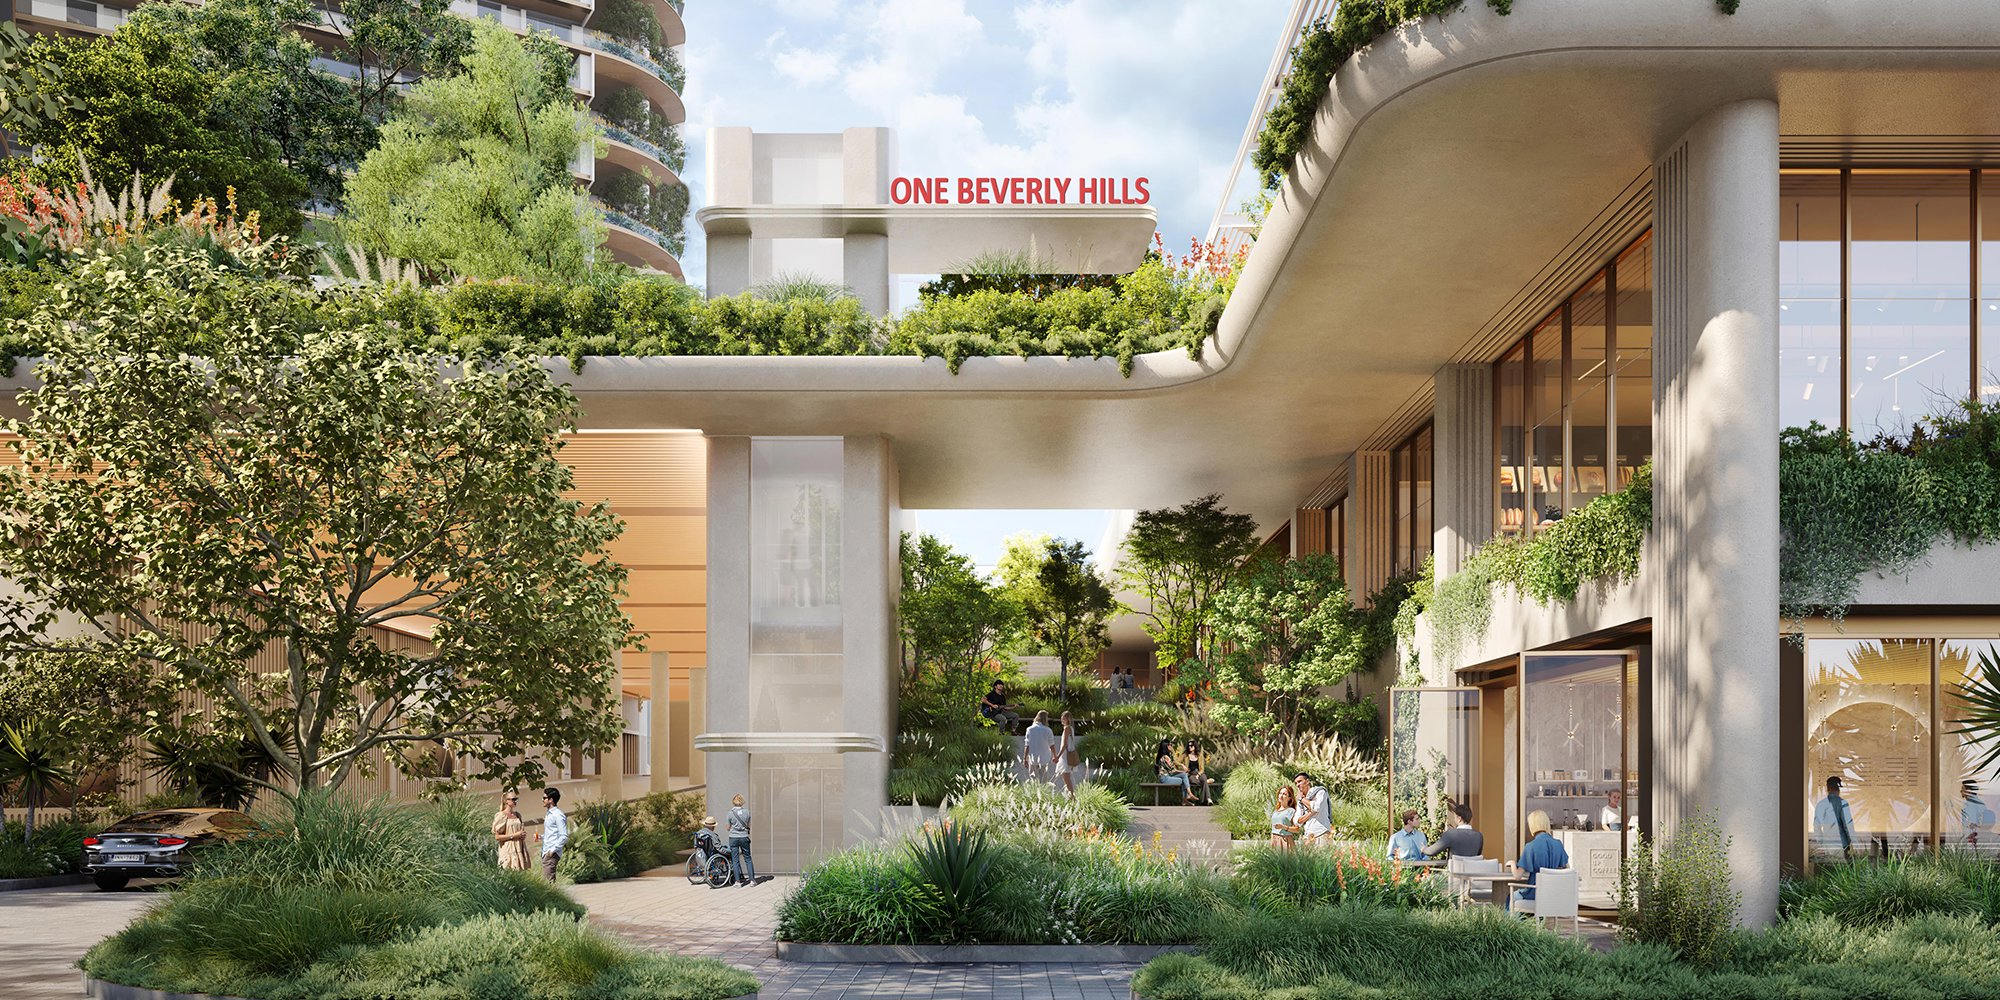 One Beverly Hills Breaks Ground